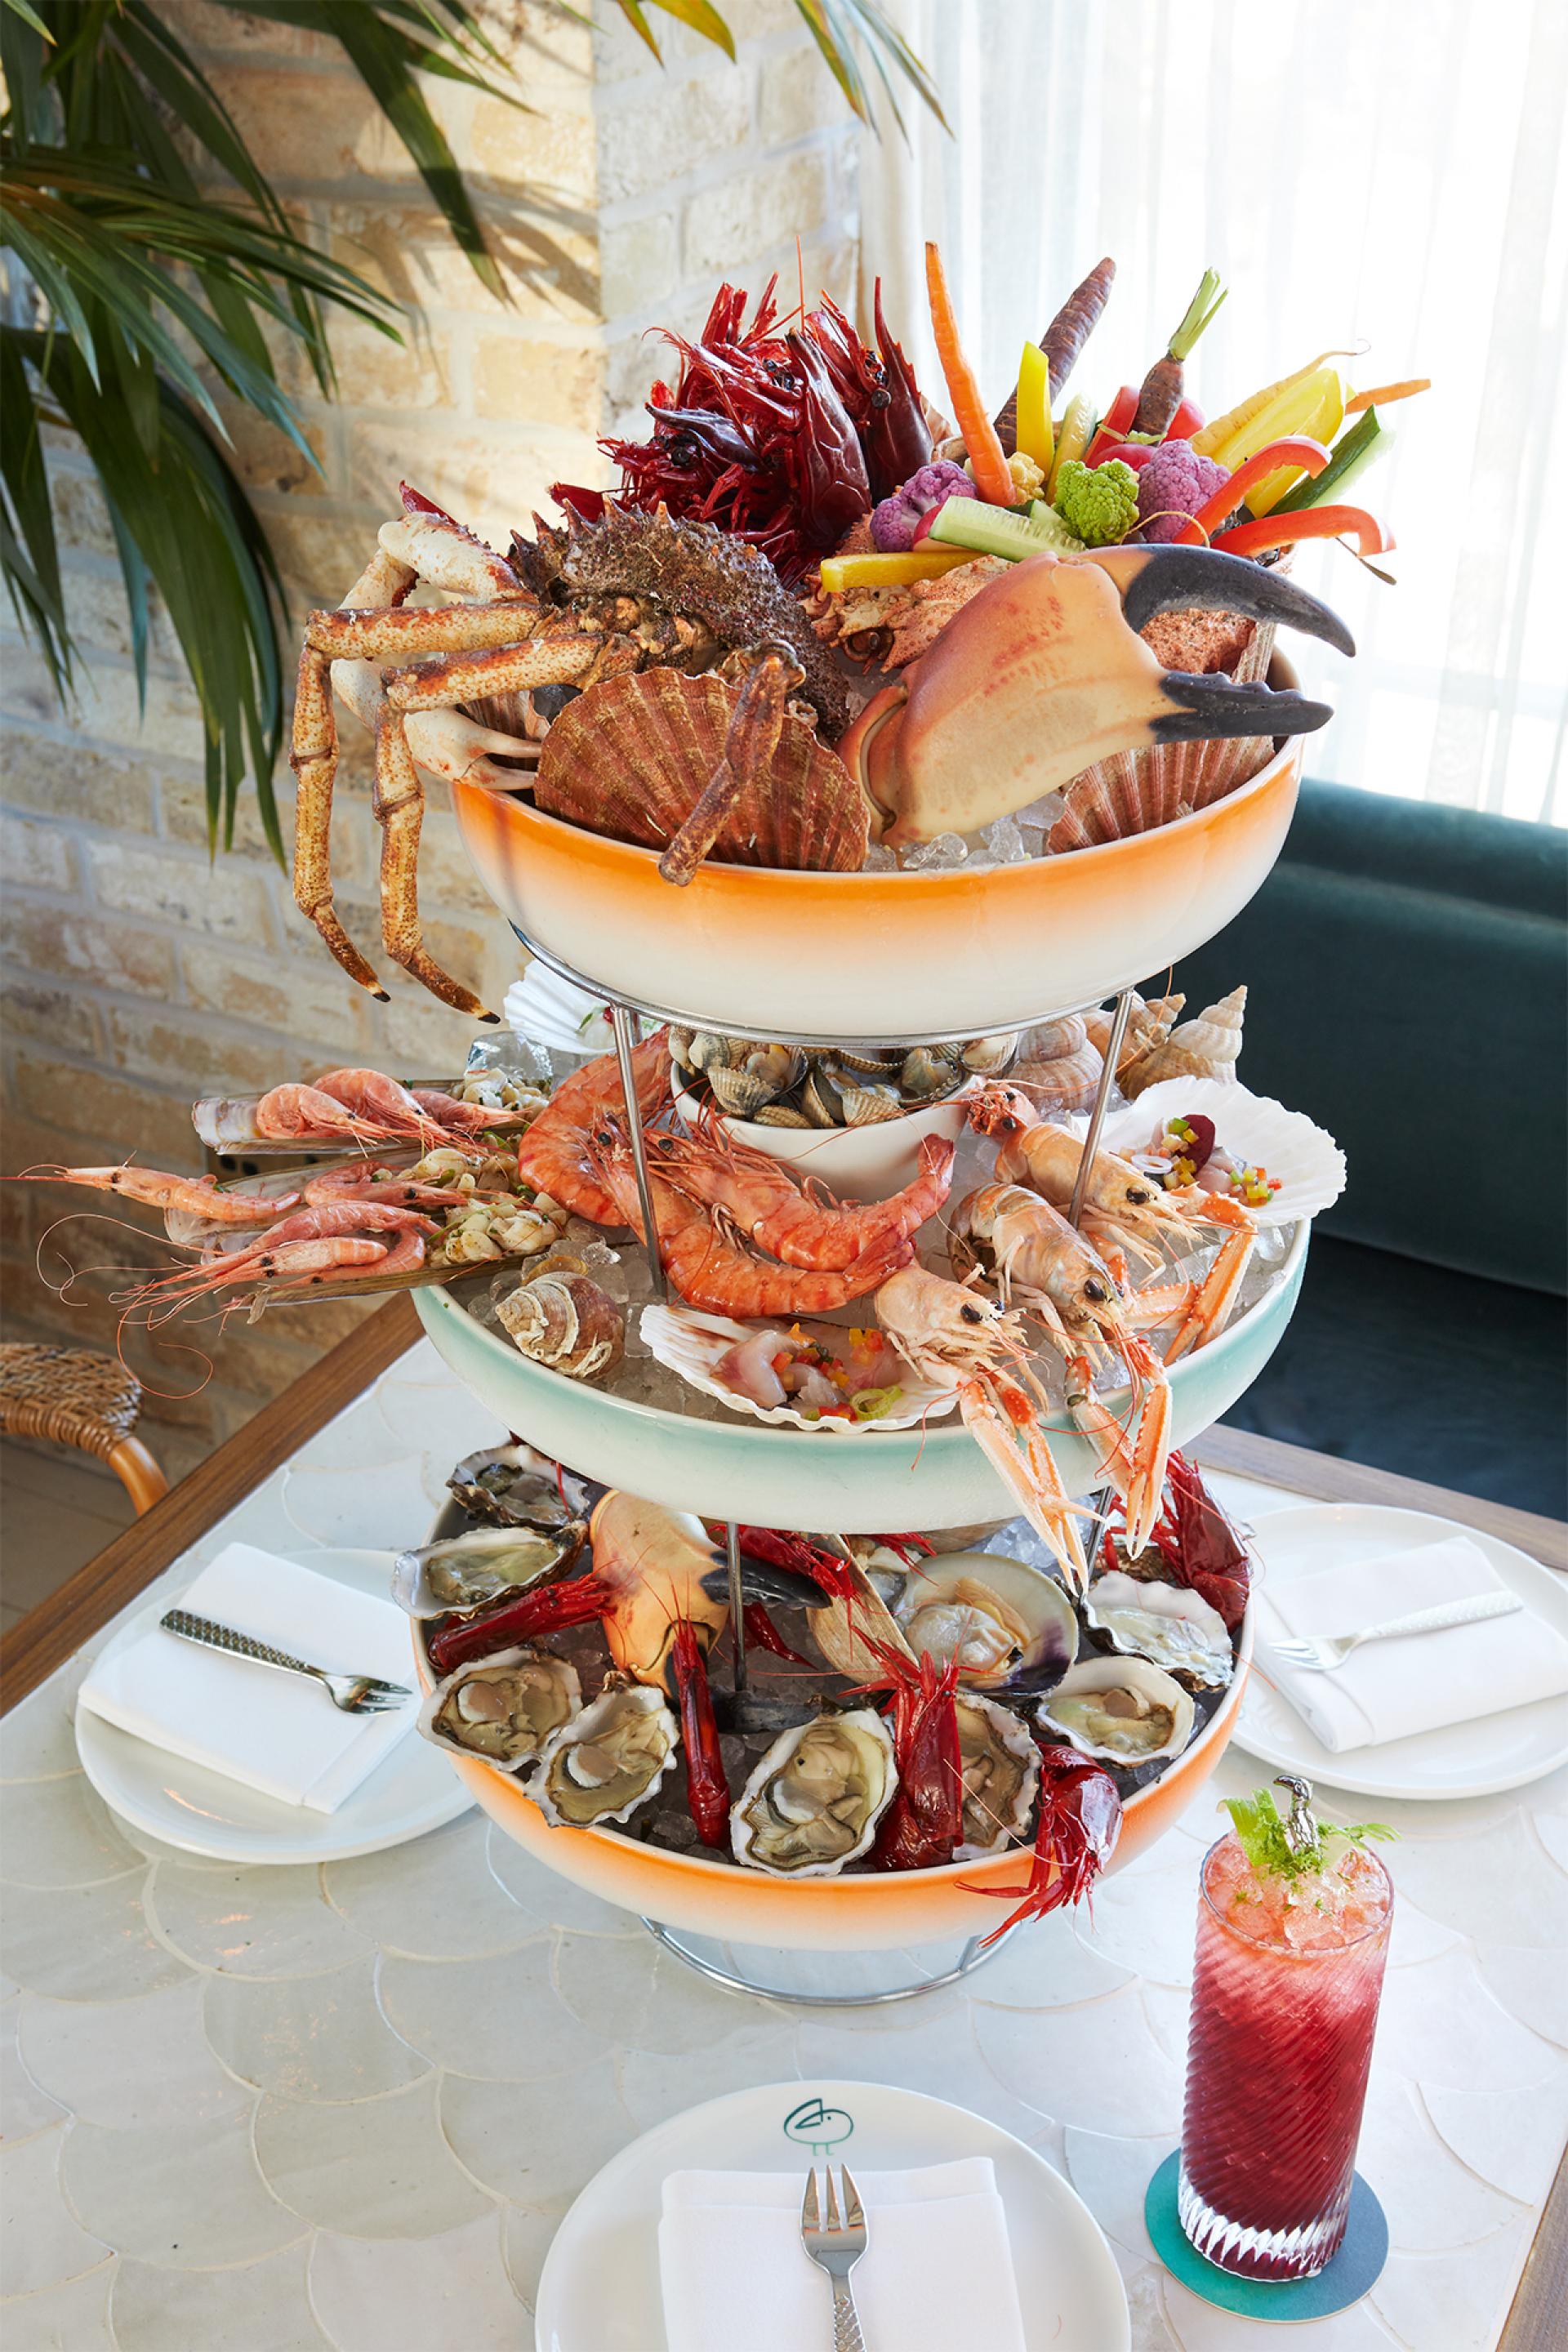 Seabird restaurant: seafood platter